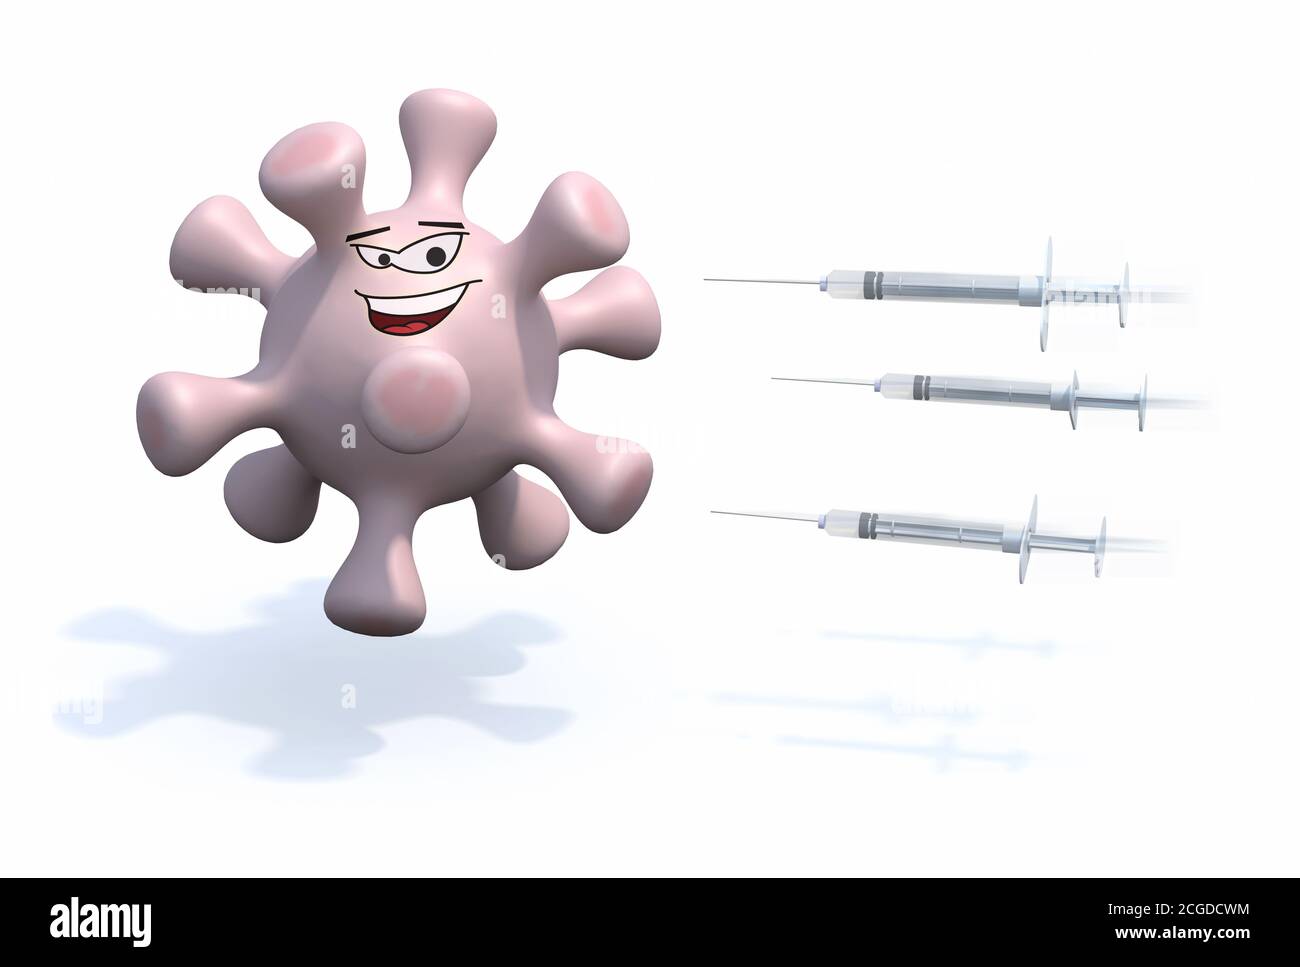 corona virus cartoon and syringes, 3d illustration Stock Photo